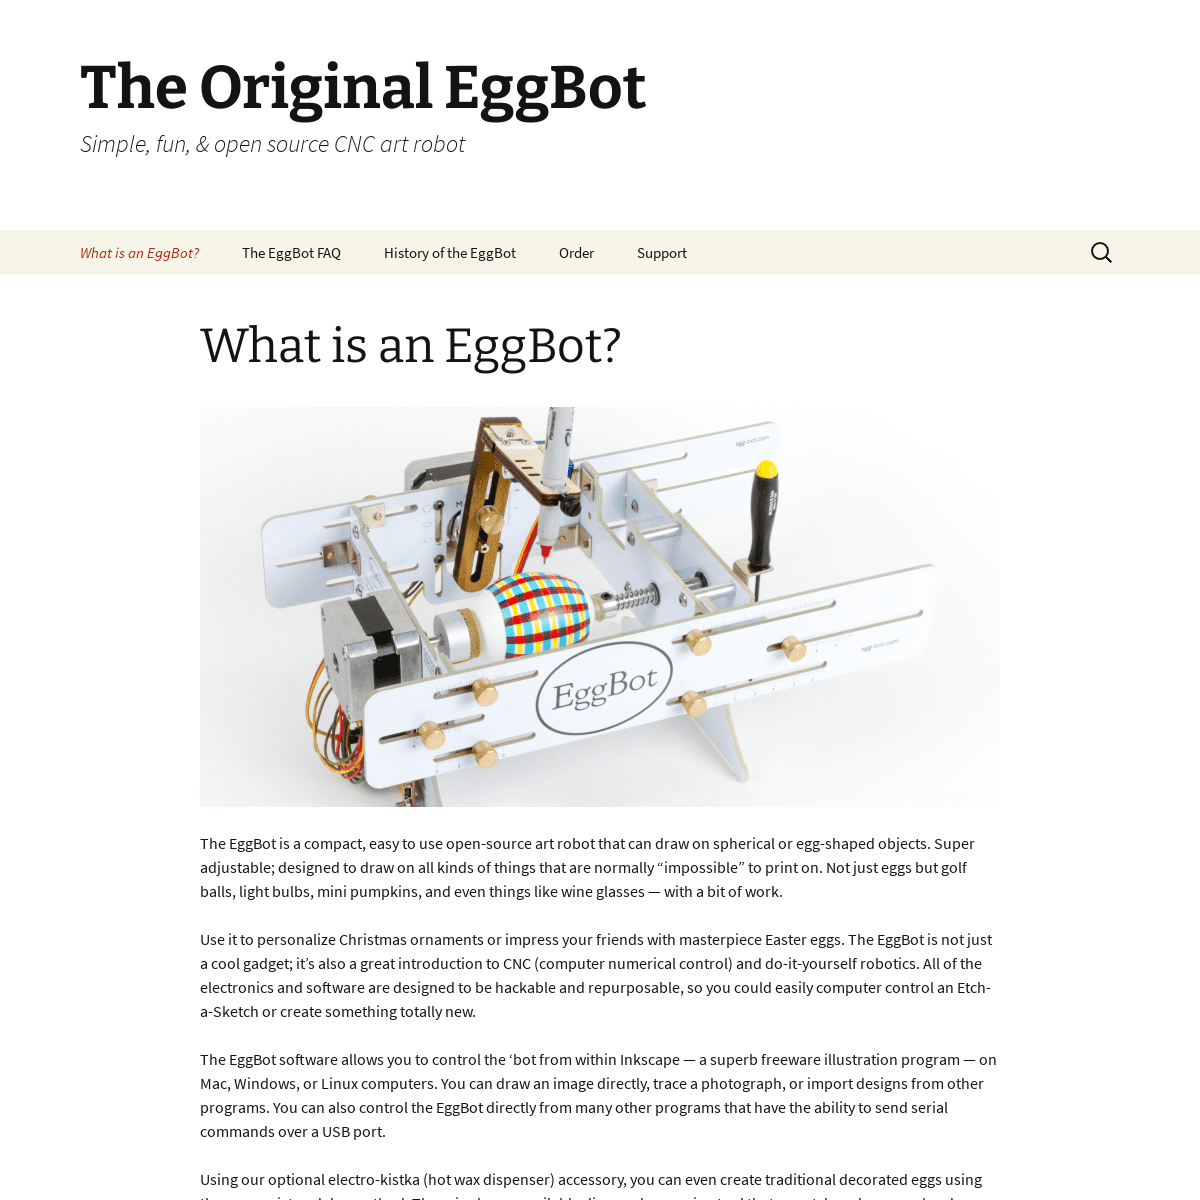 The Original EggBot - Simple, fun, & open source CNC art robot